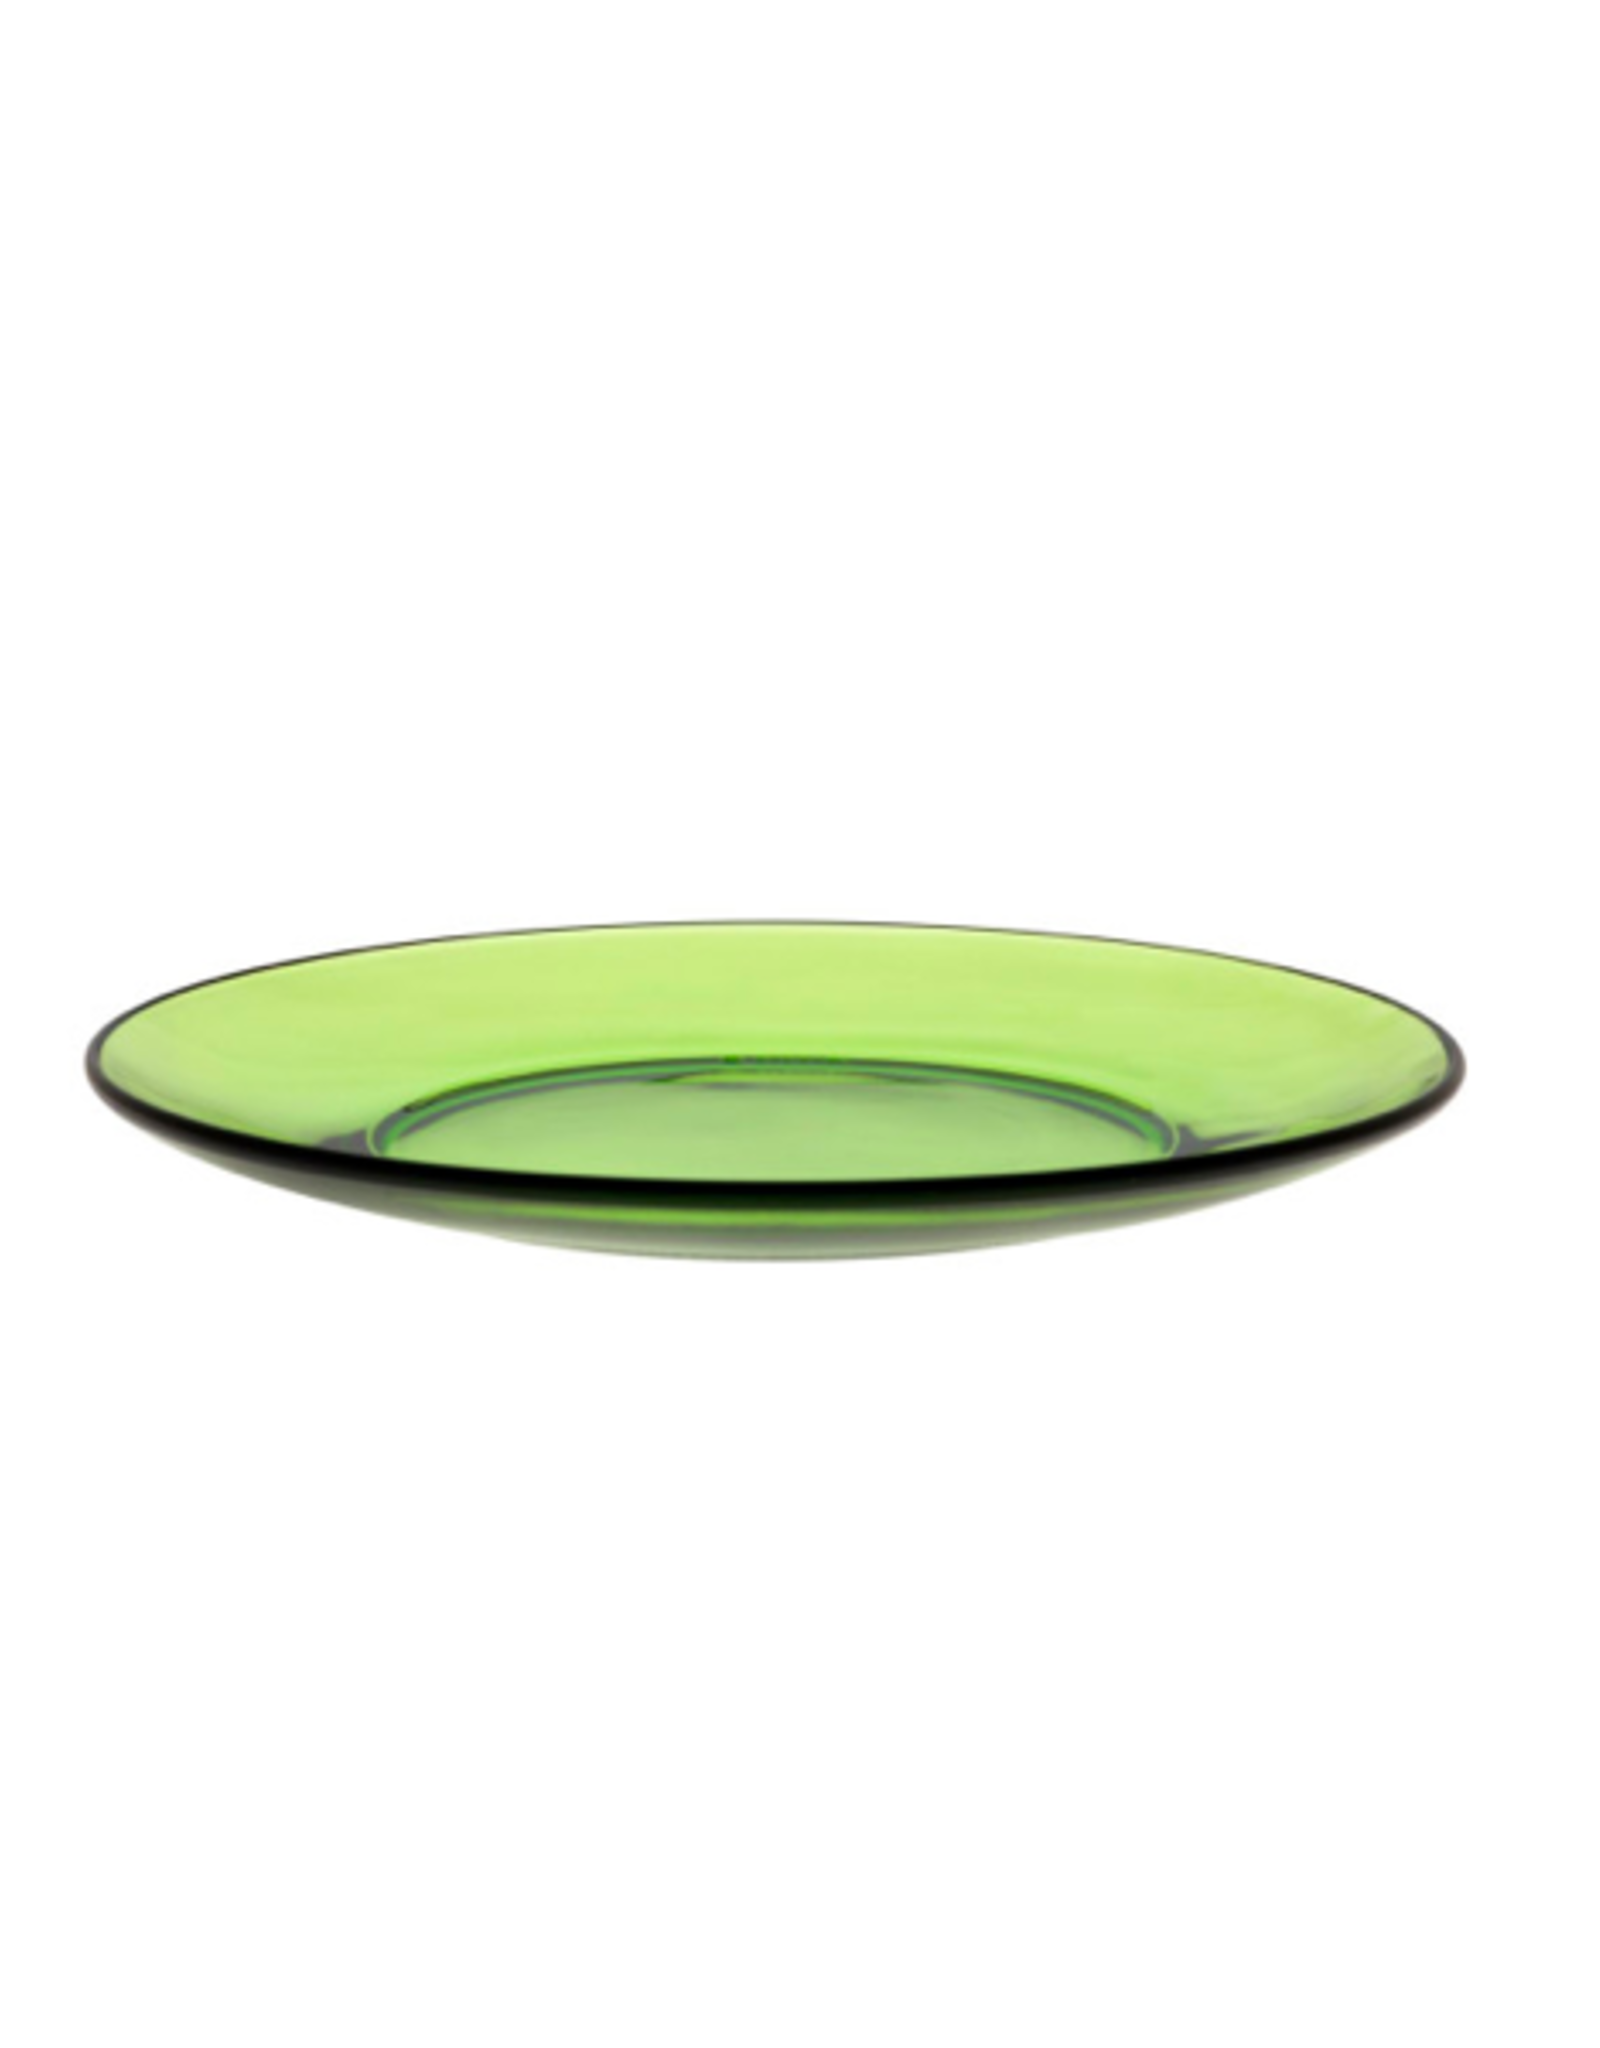 ICM - Duralex Glass Plate / Lys, Green, 9"